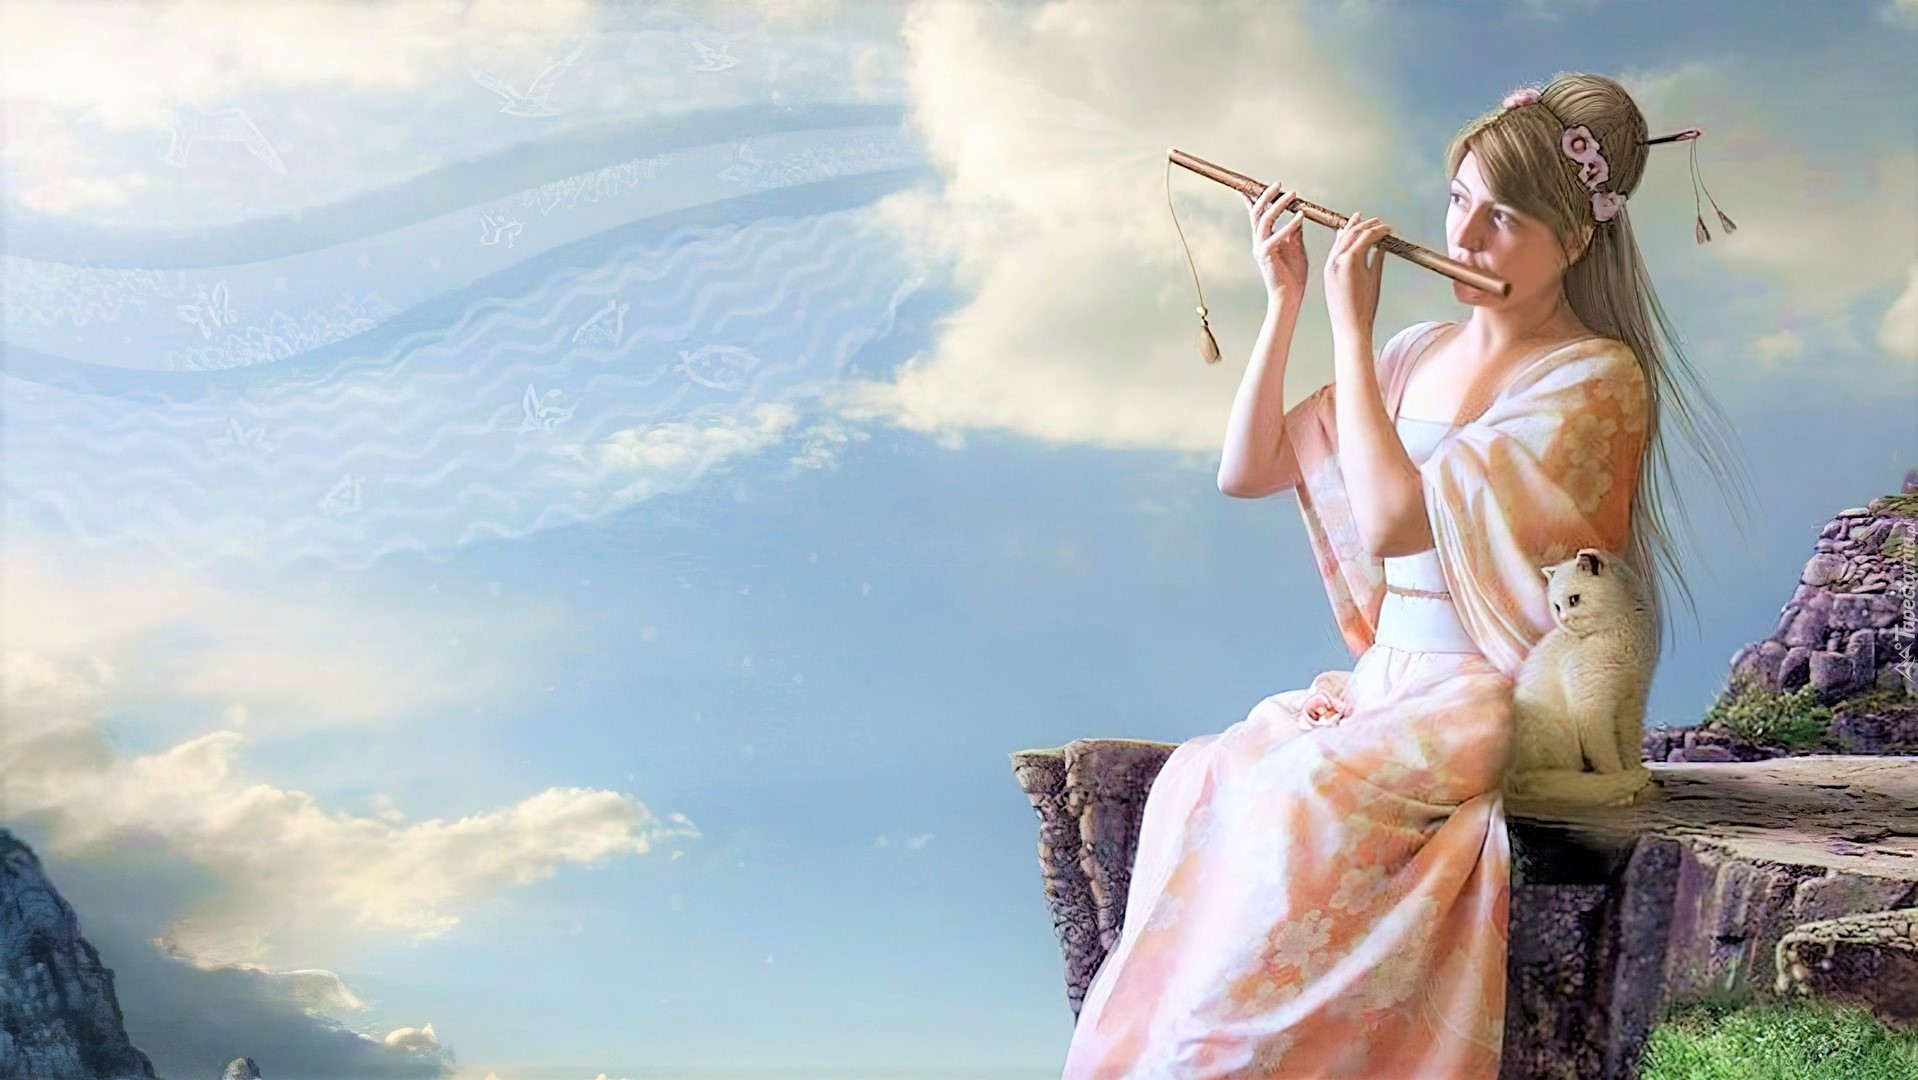 Girl woman песня. Девушка с флейтой. Девушка с флейтой фэнтези. Флейта на природе. Девушка с флейтой картина.